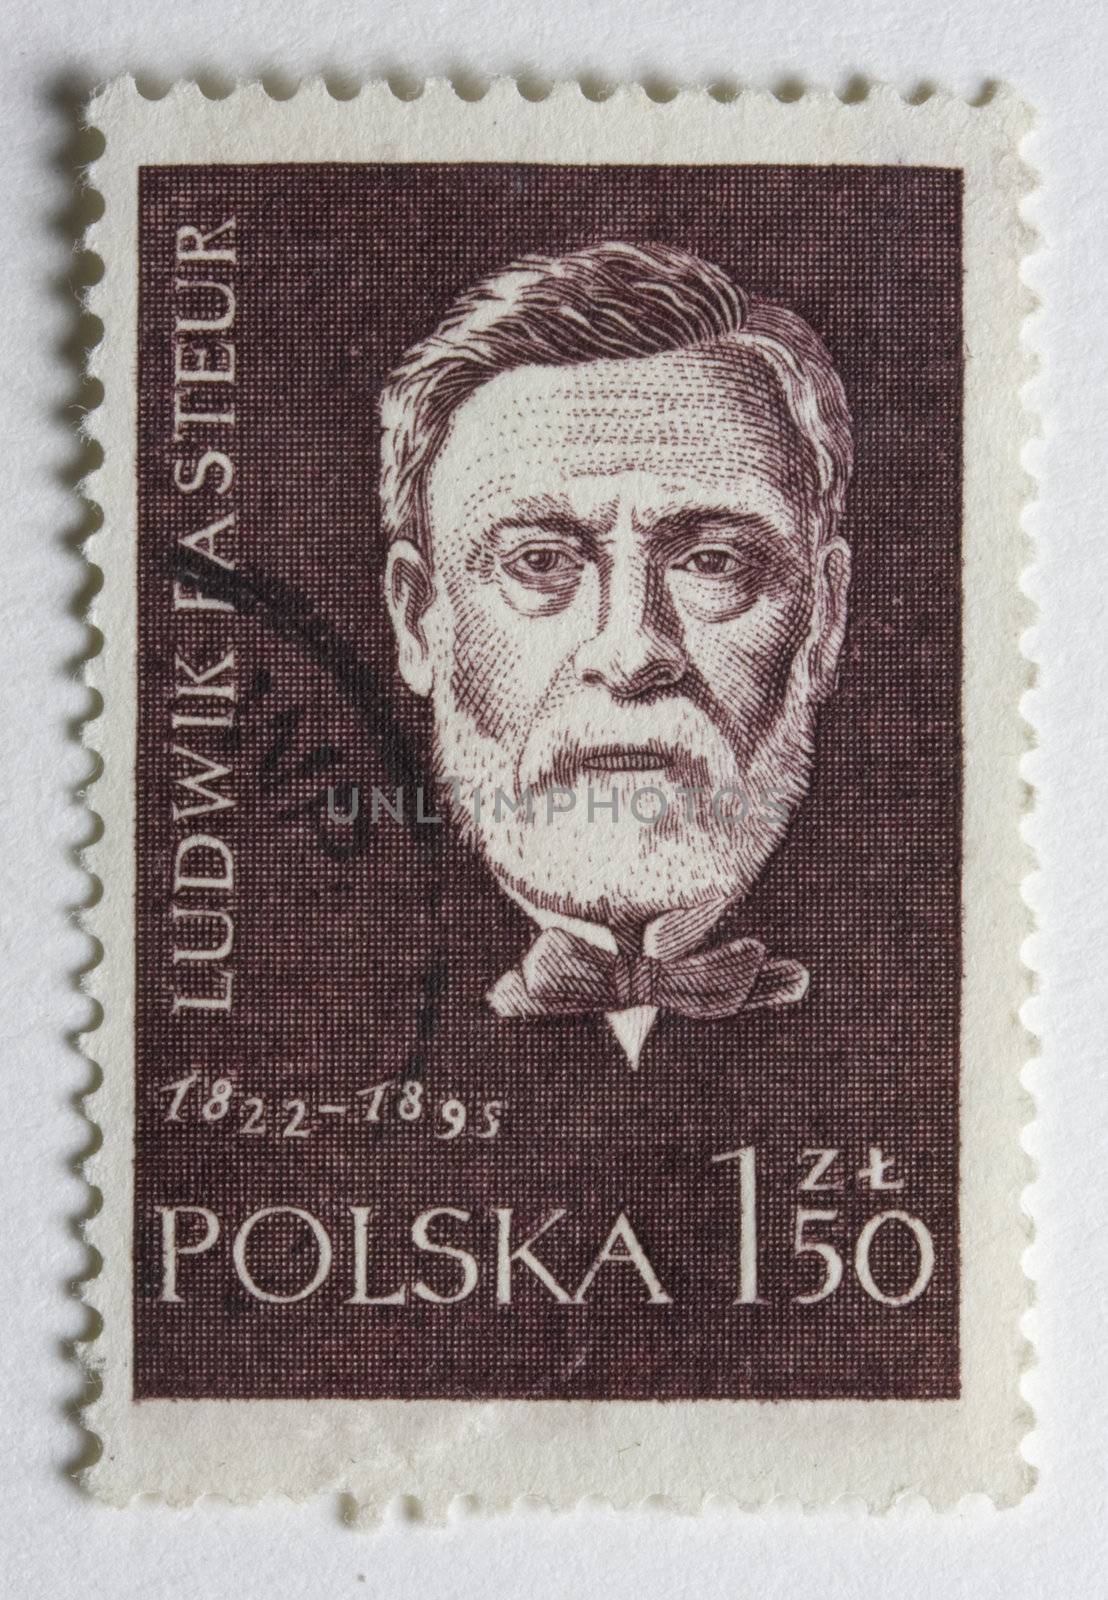 Louis Pasteur on a vintage post stamp by PixelsAway